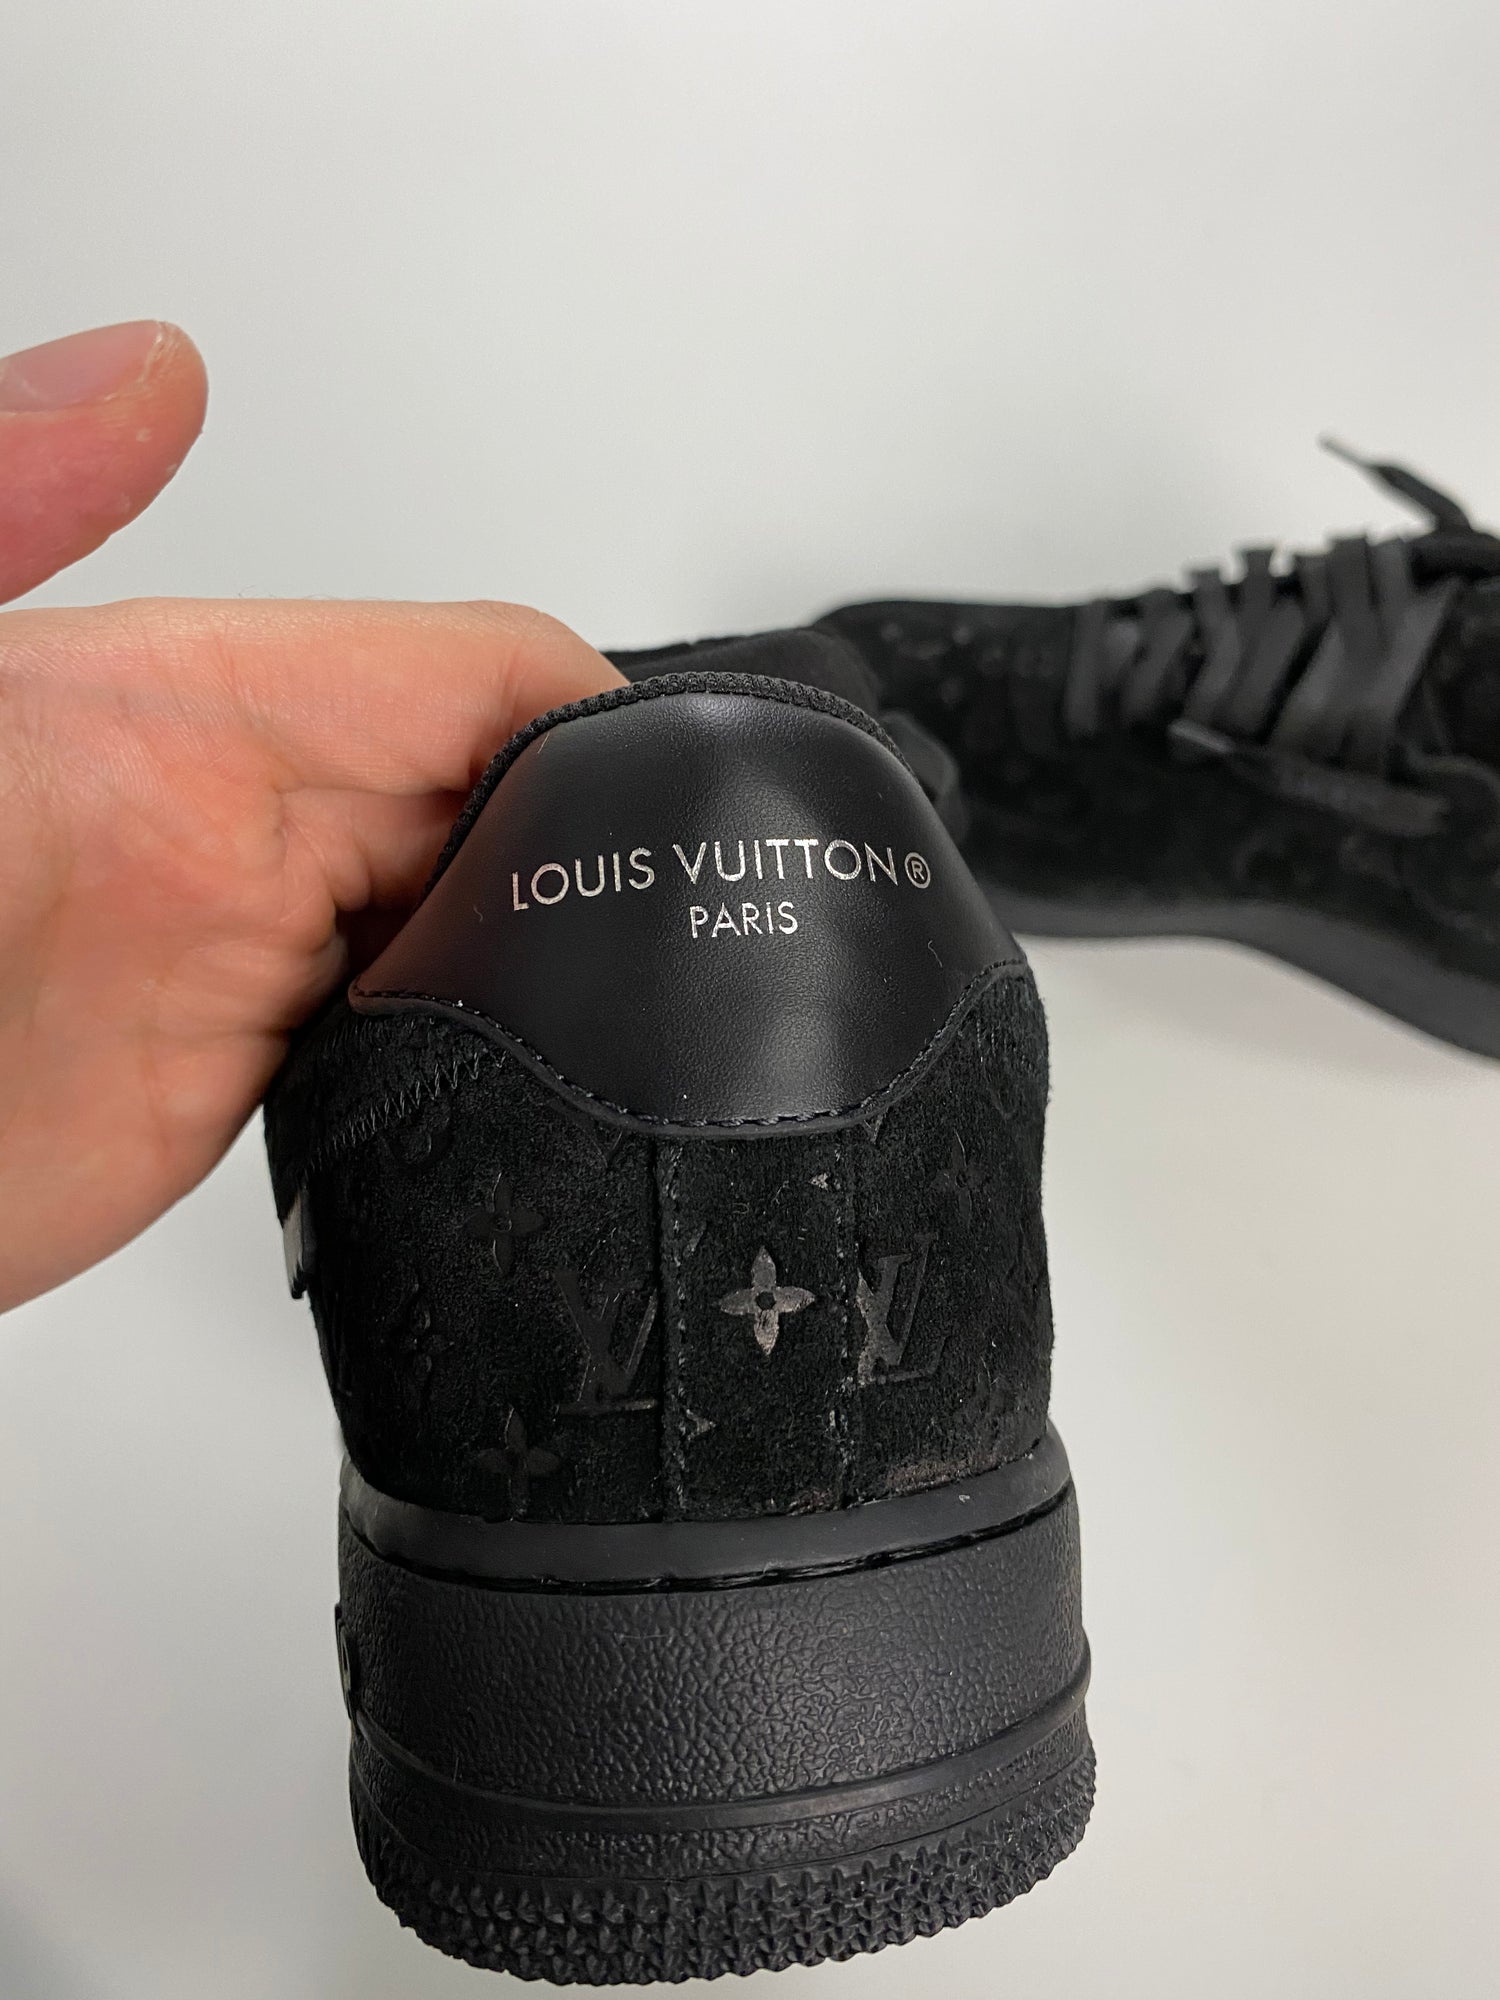 Louis Vuitton Nike Air Force 1 Low by Virgil Abloh Black Metallic Silver